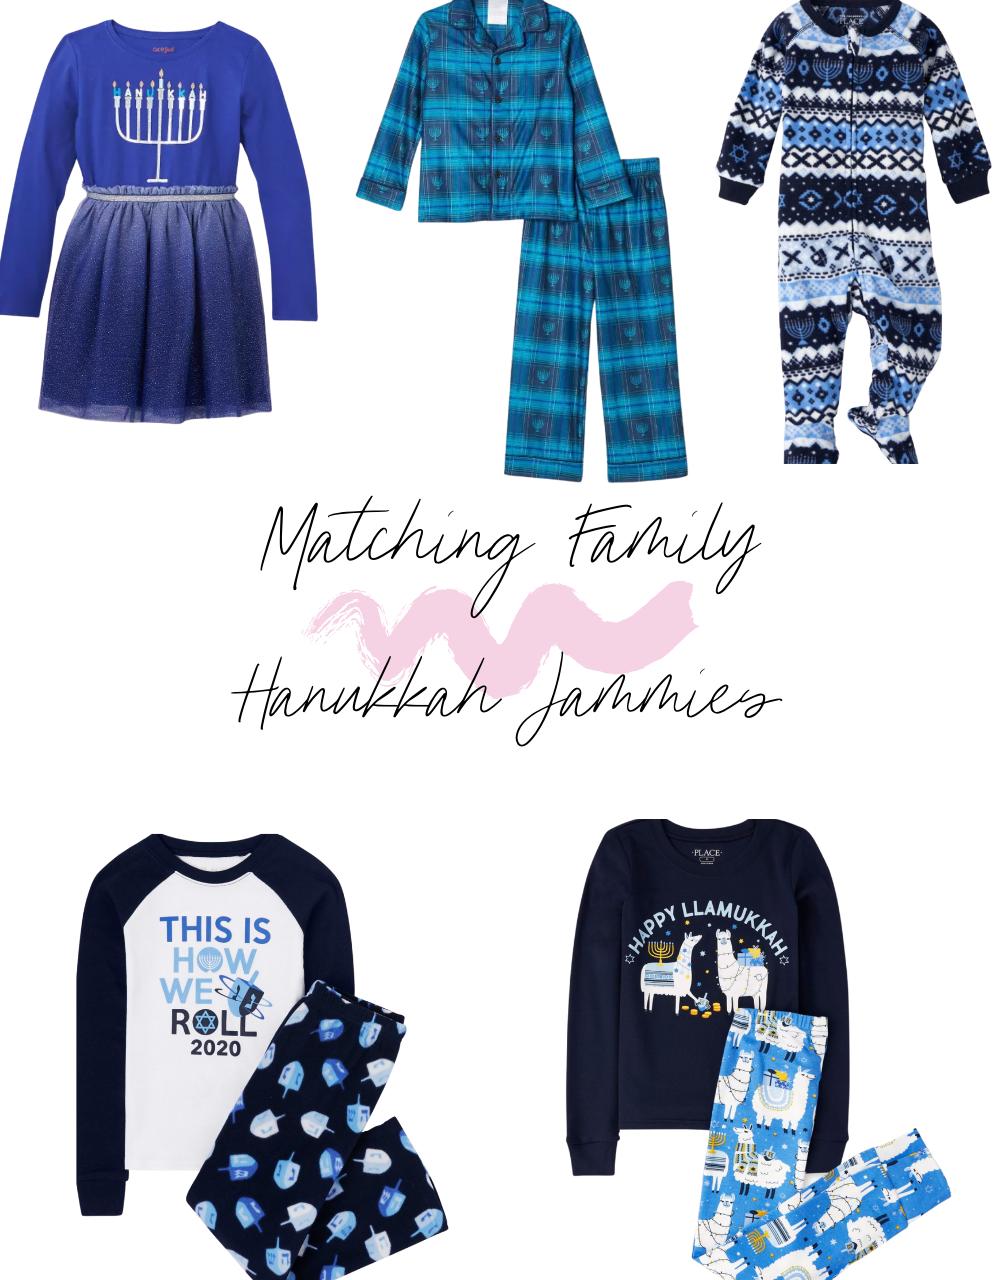 Hanukkah Family Matching Pajamas and Outfits 2020